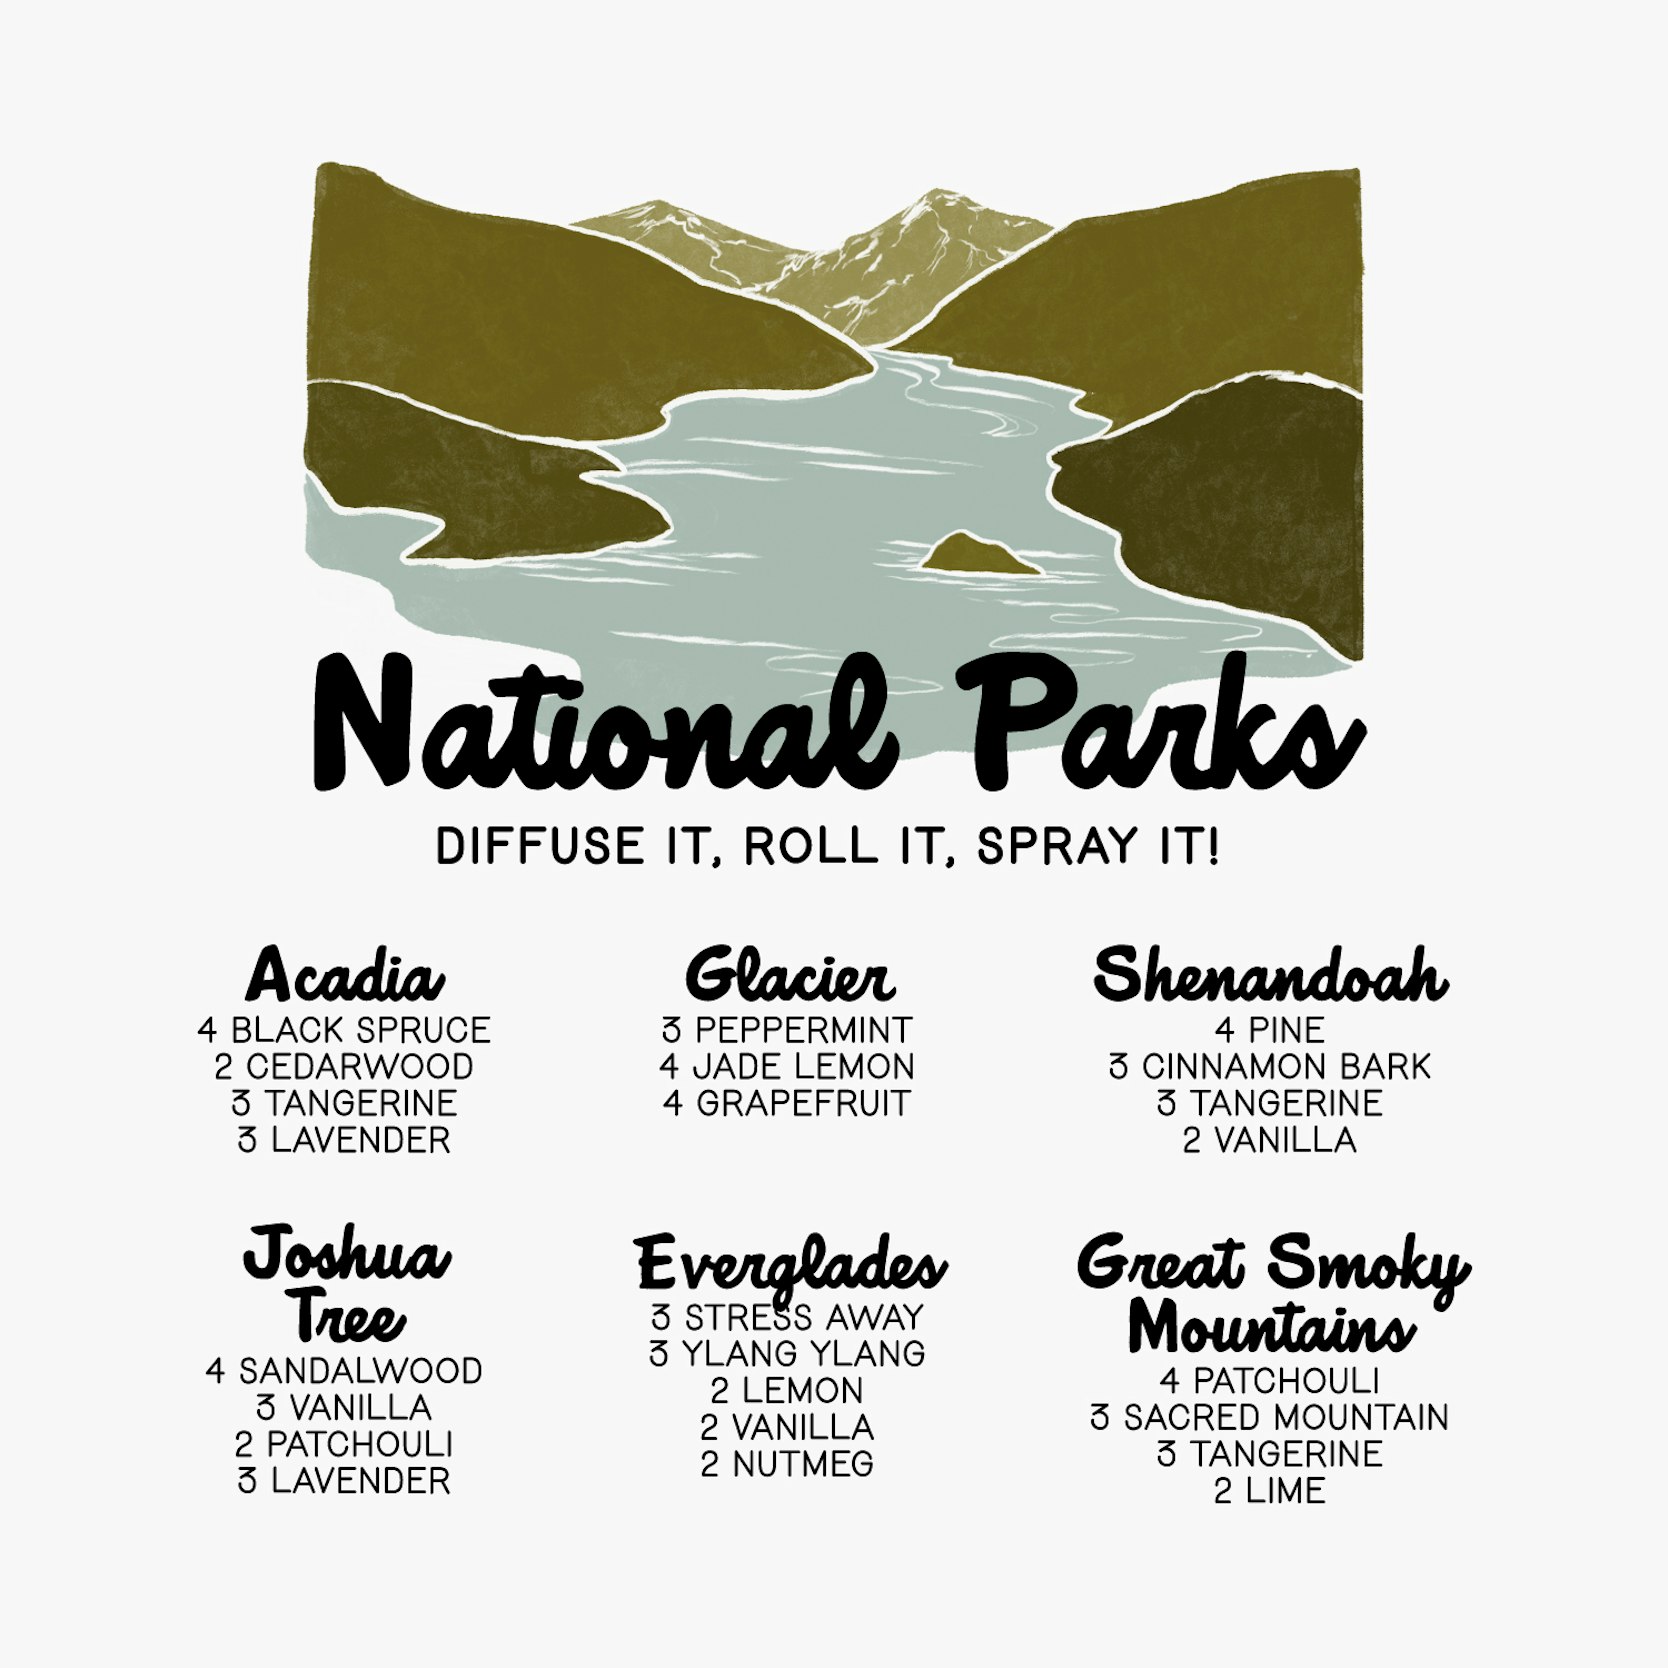 NationalParks